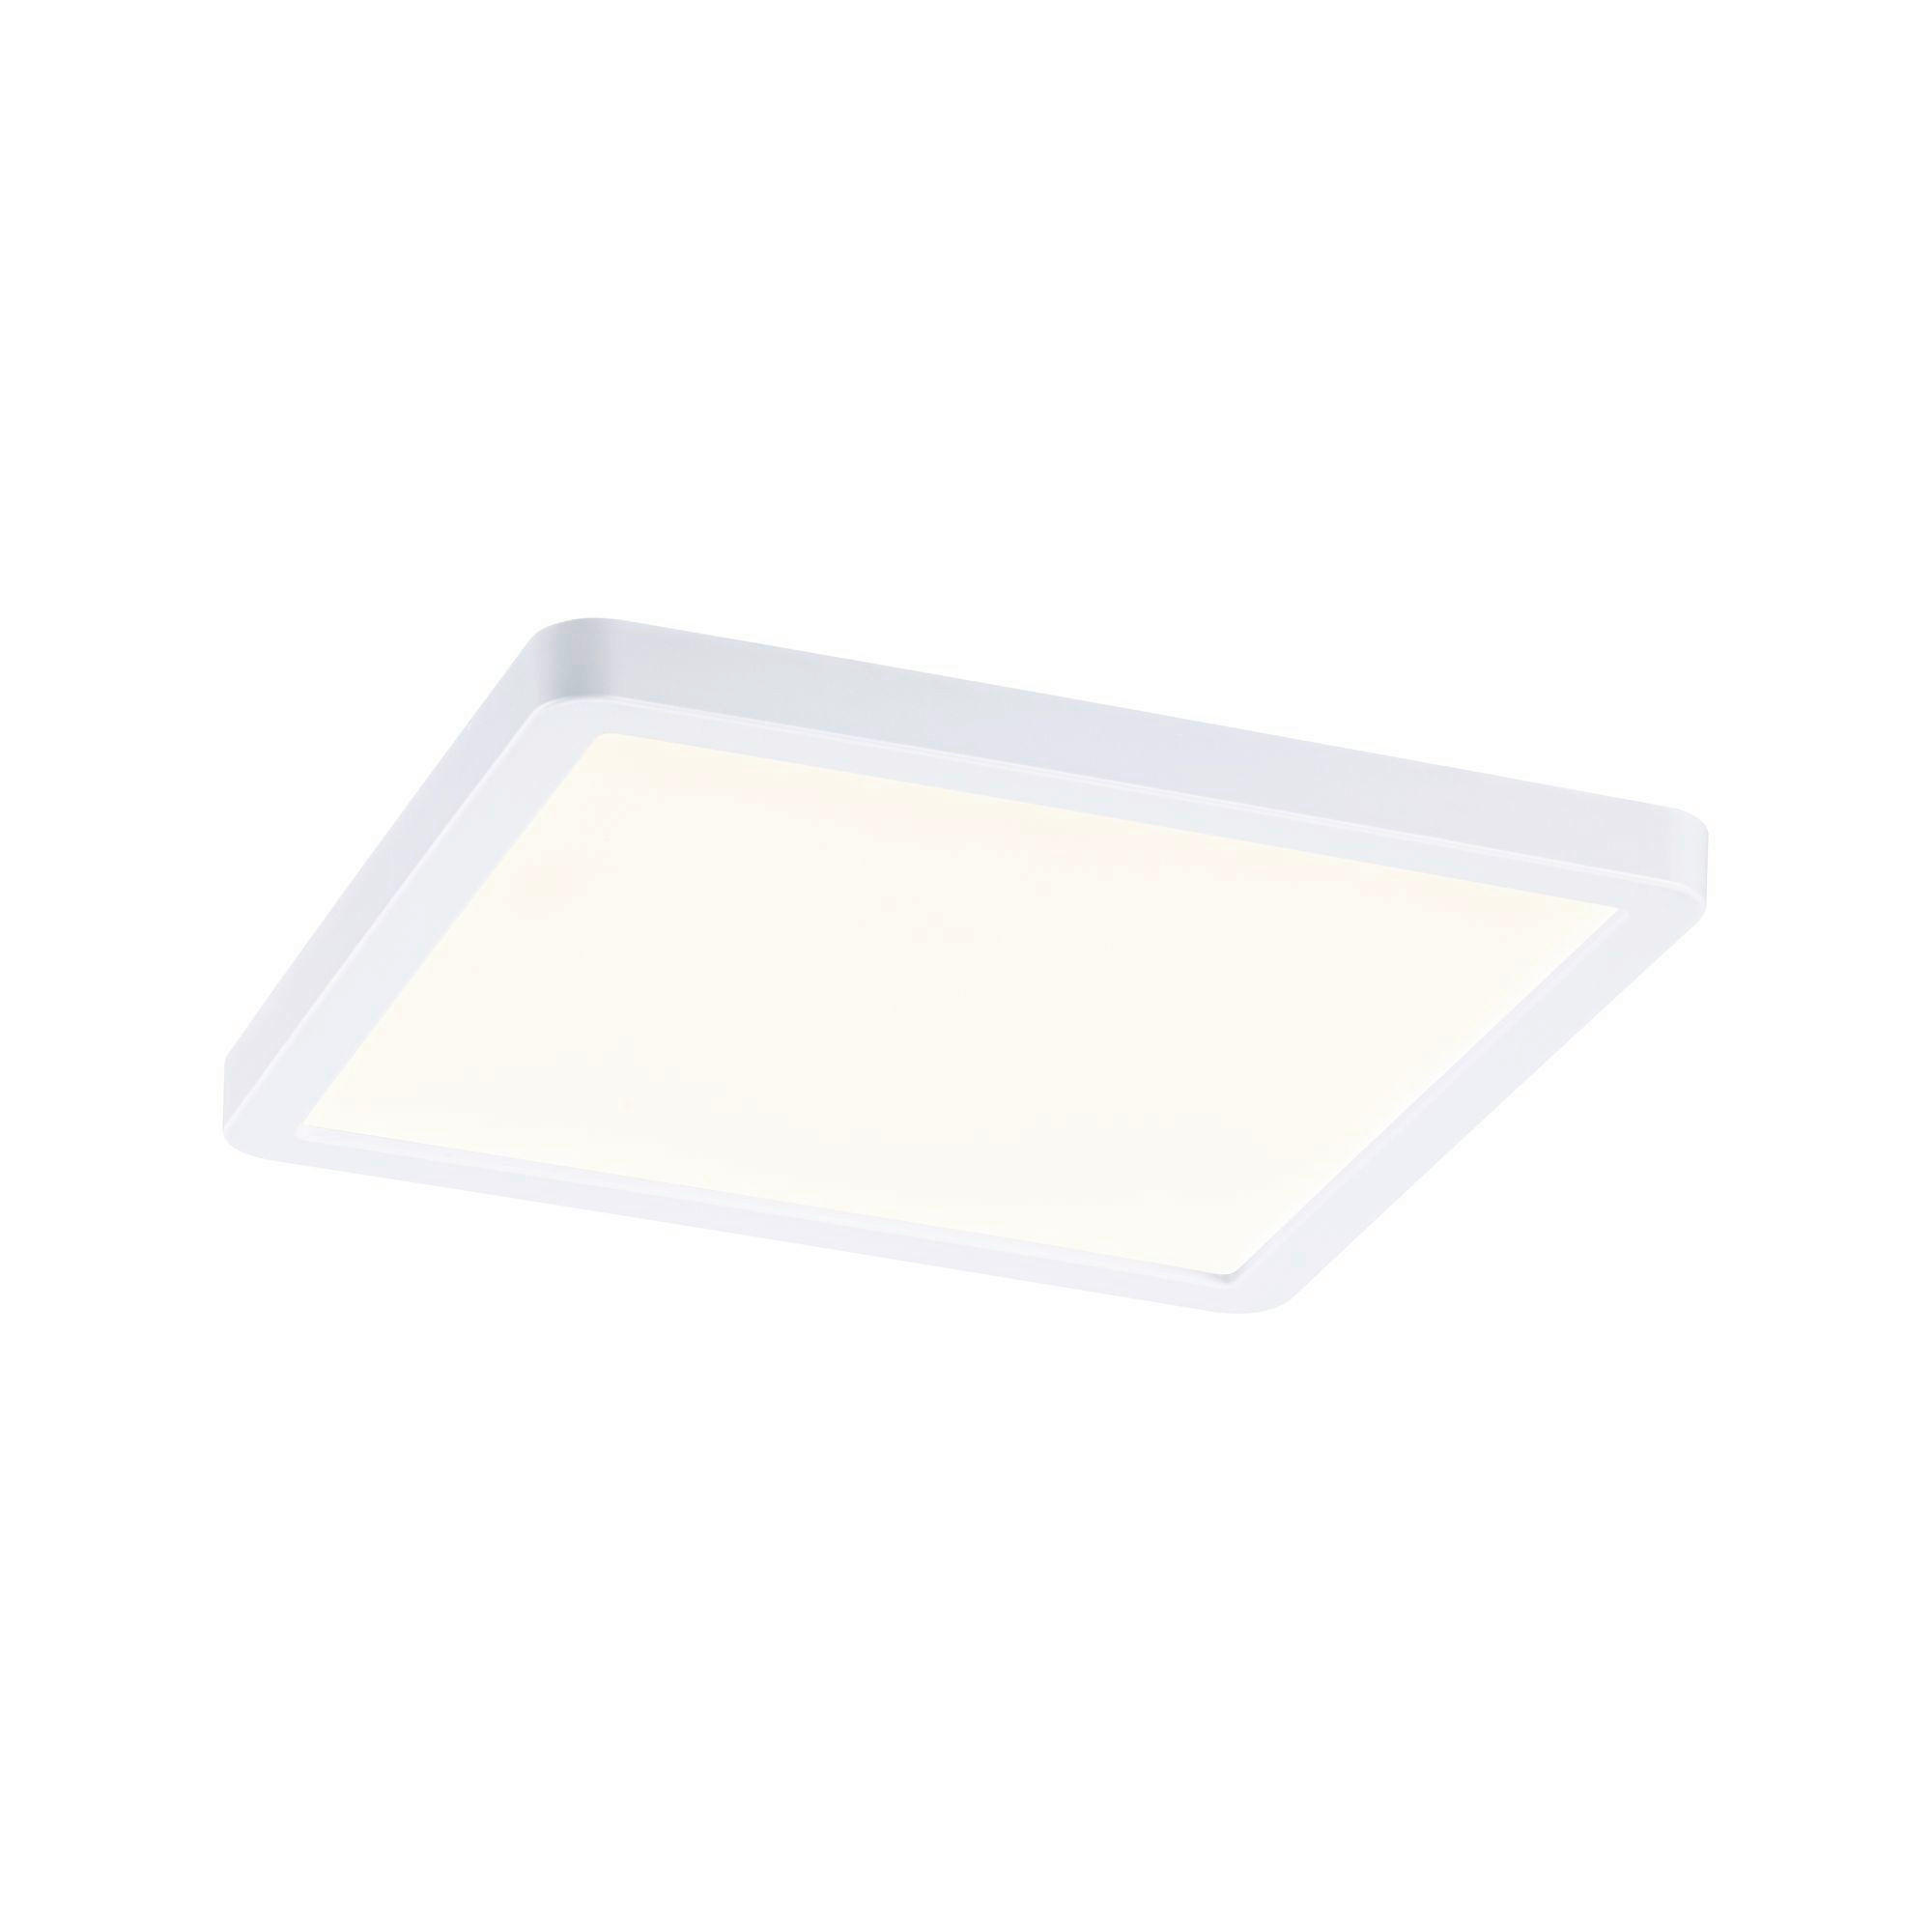 LED-PANEEL  - Weiß, Design, Kunststoff (17,5/17,5/5cm) - Paulmann